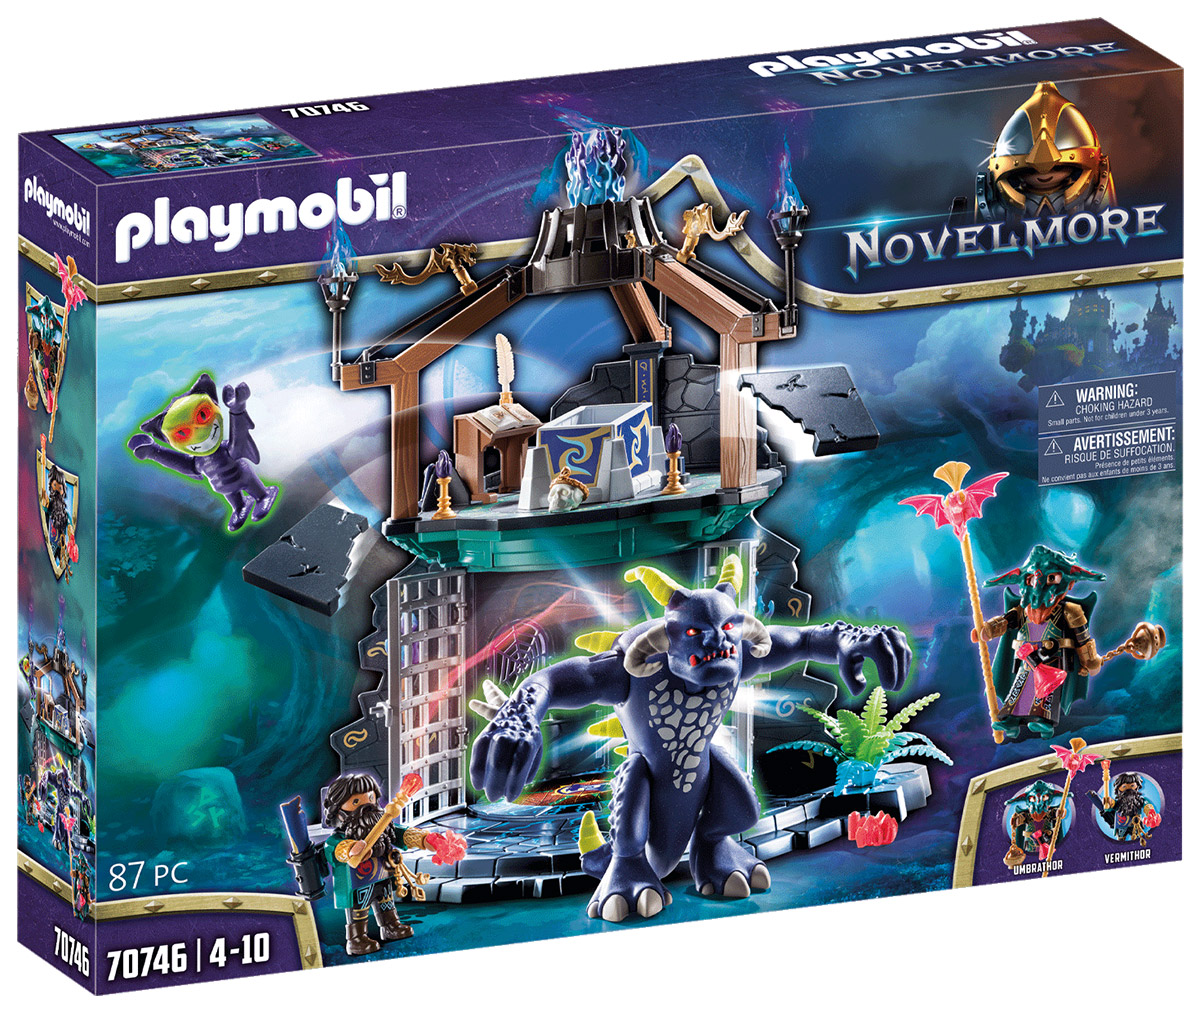 PLAYMOBIL Novelmore 70746 Violet Vale - Portail des démons - Prix Playmobil // Août 2021